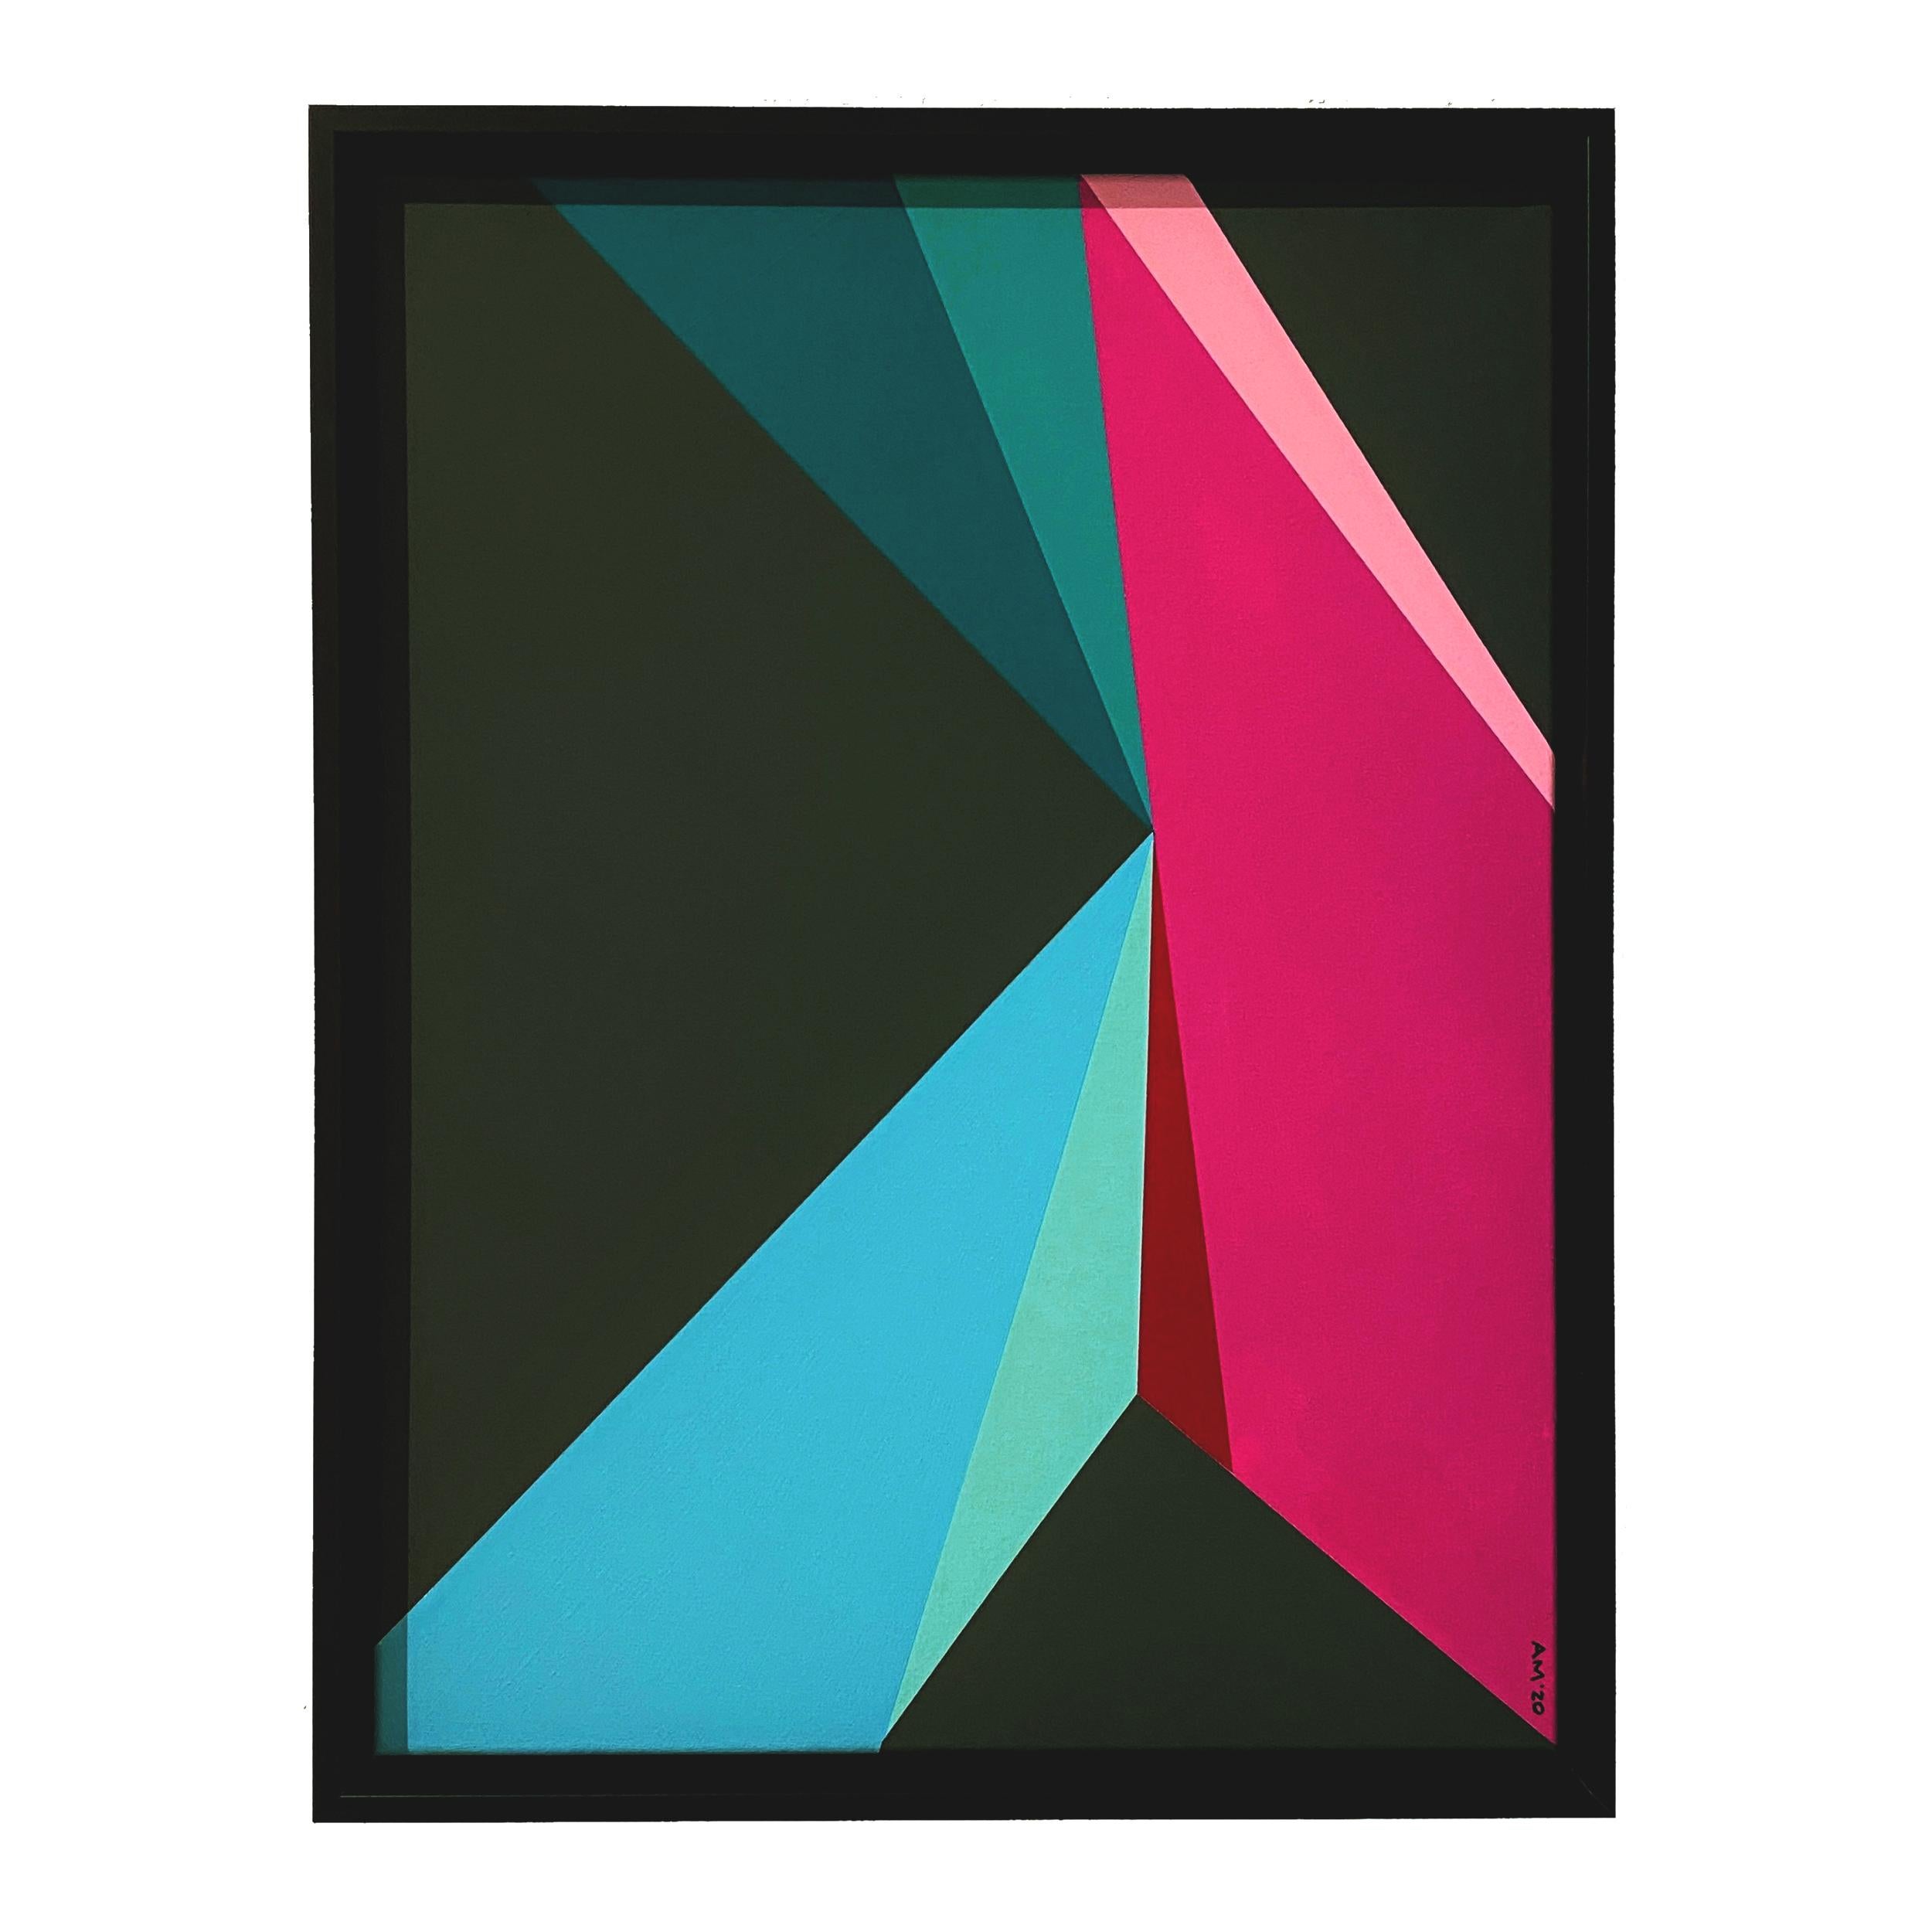 Andrew Mandolene
”Color Crash”
Acrylic on canvas
Framed

Dimension:
Unframed - 18